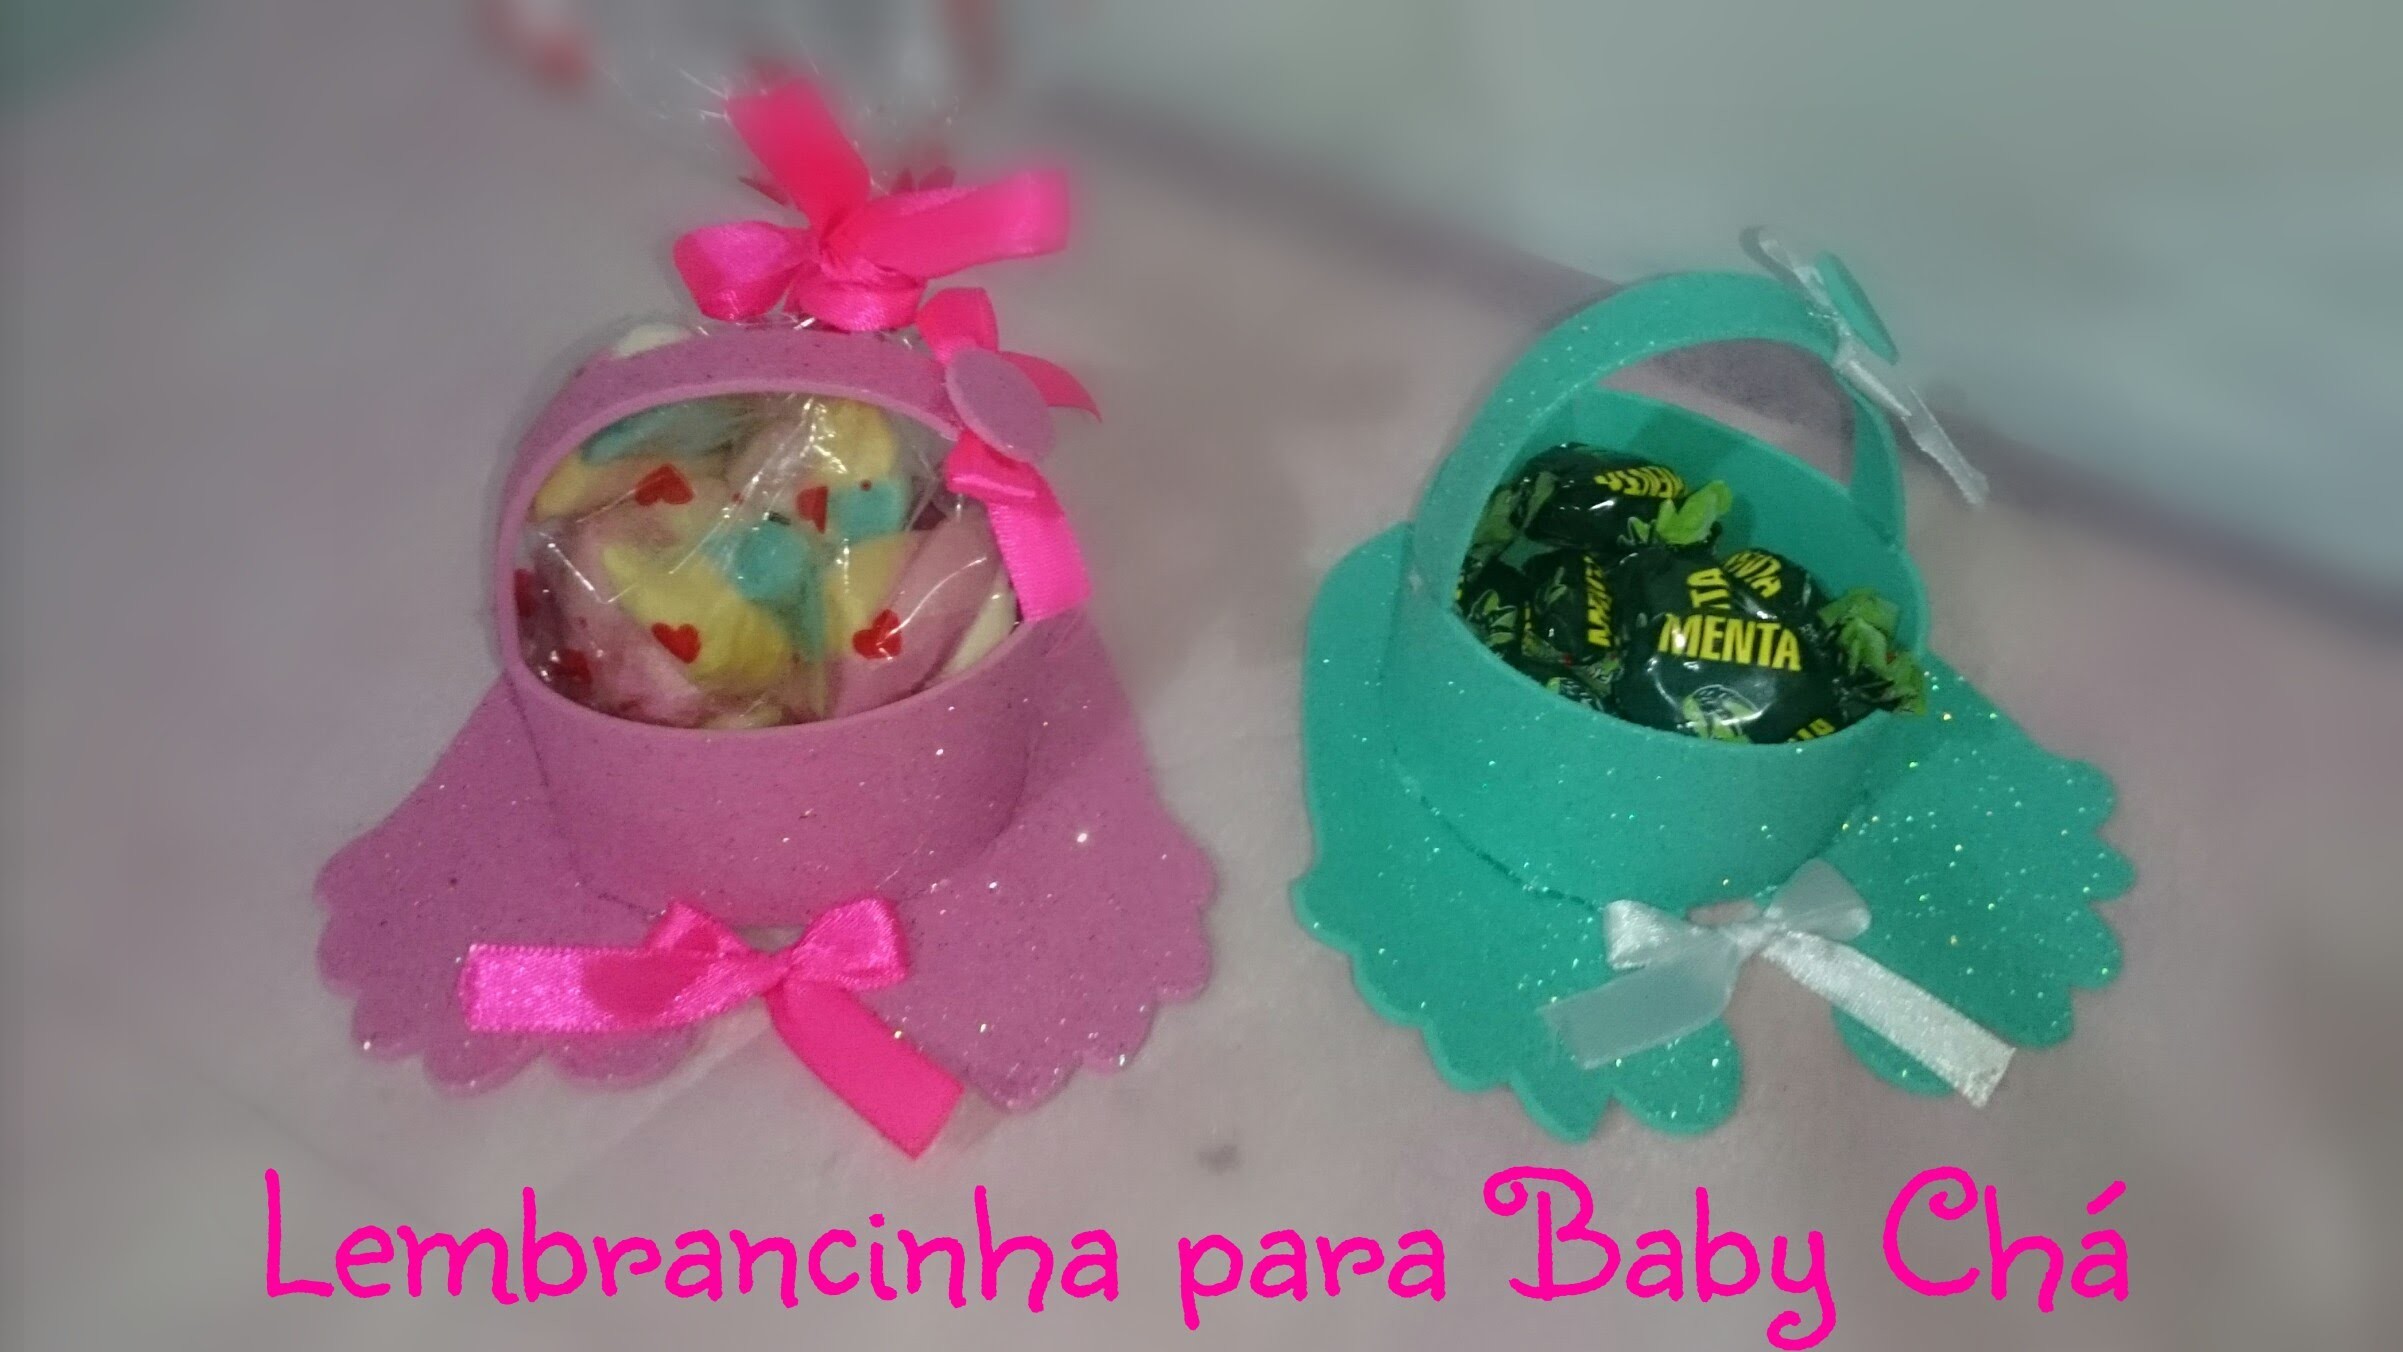 DIY: Lembrancinha para Baby Chá (FÁCIL)